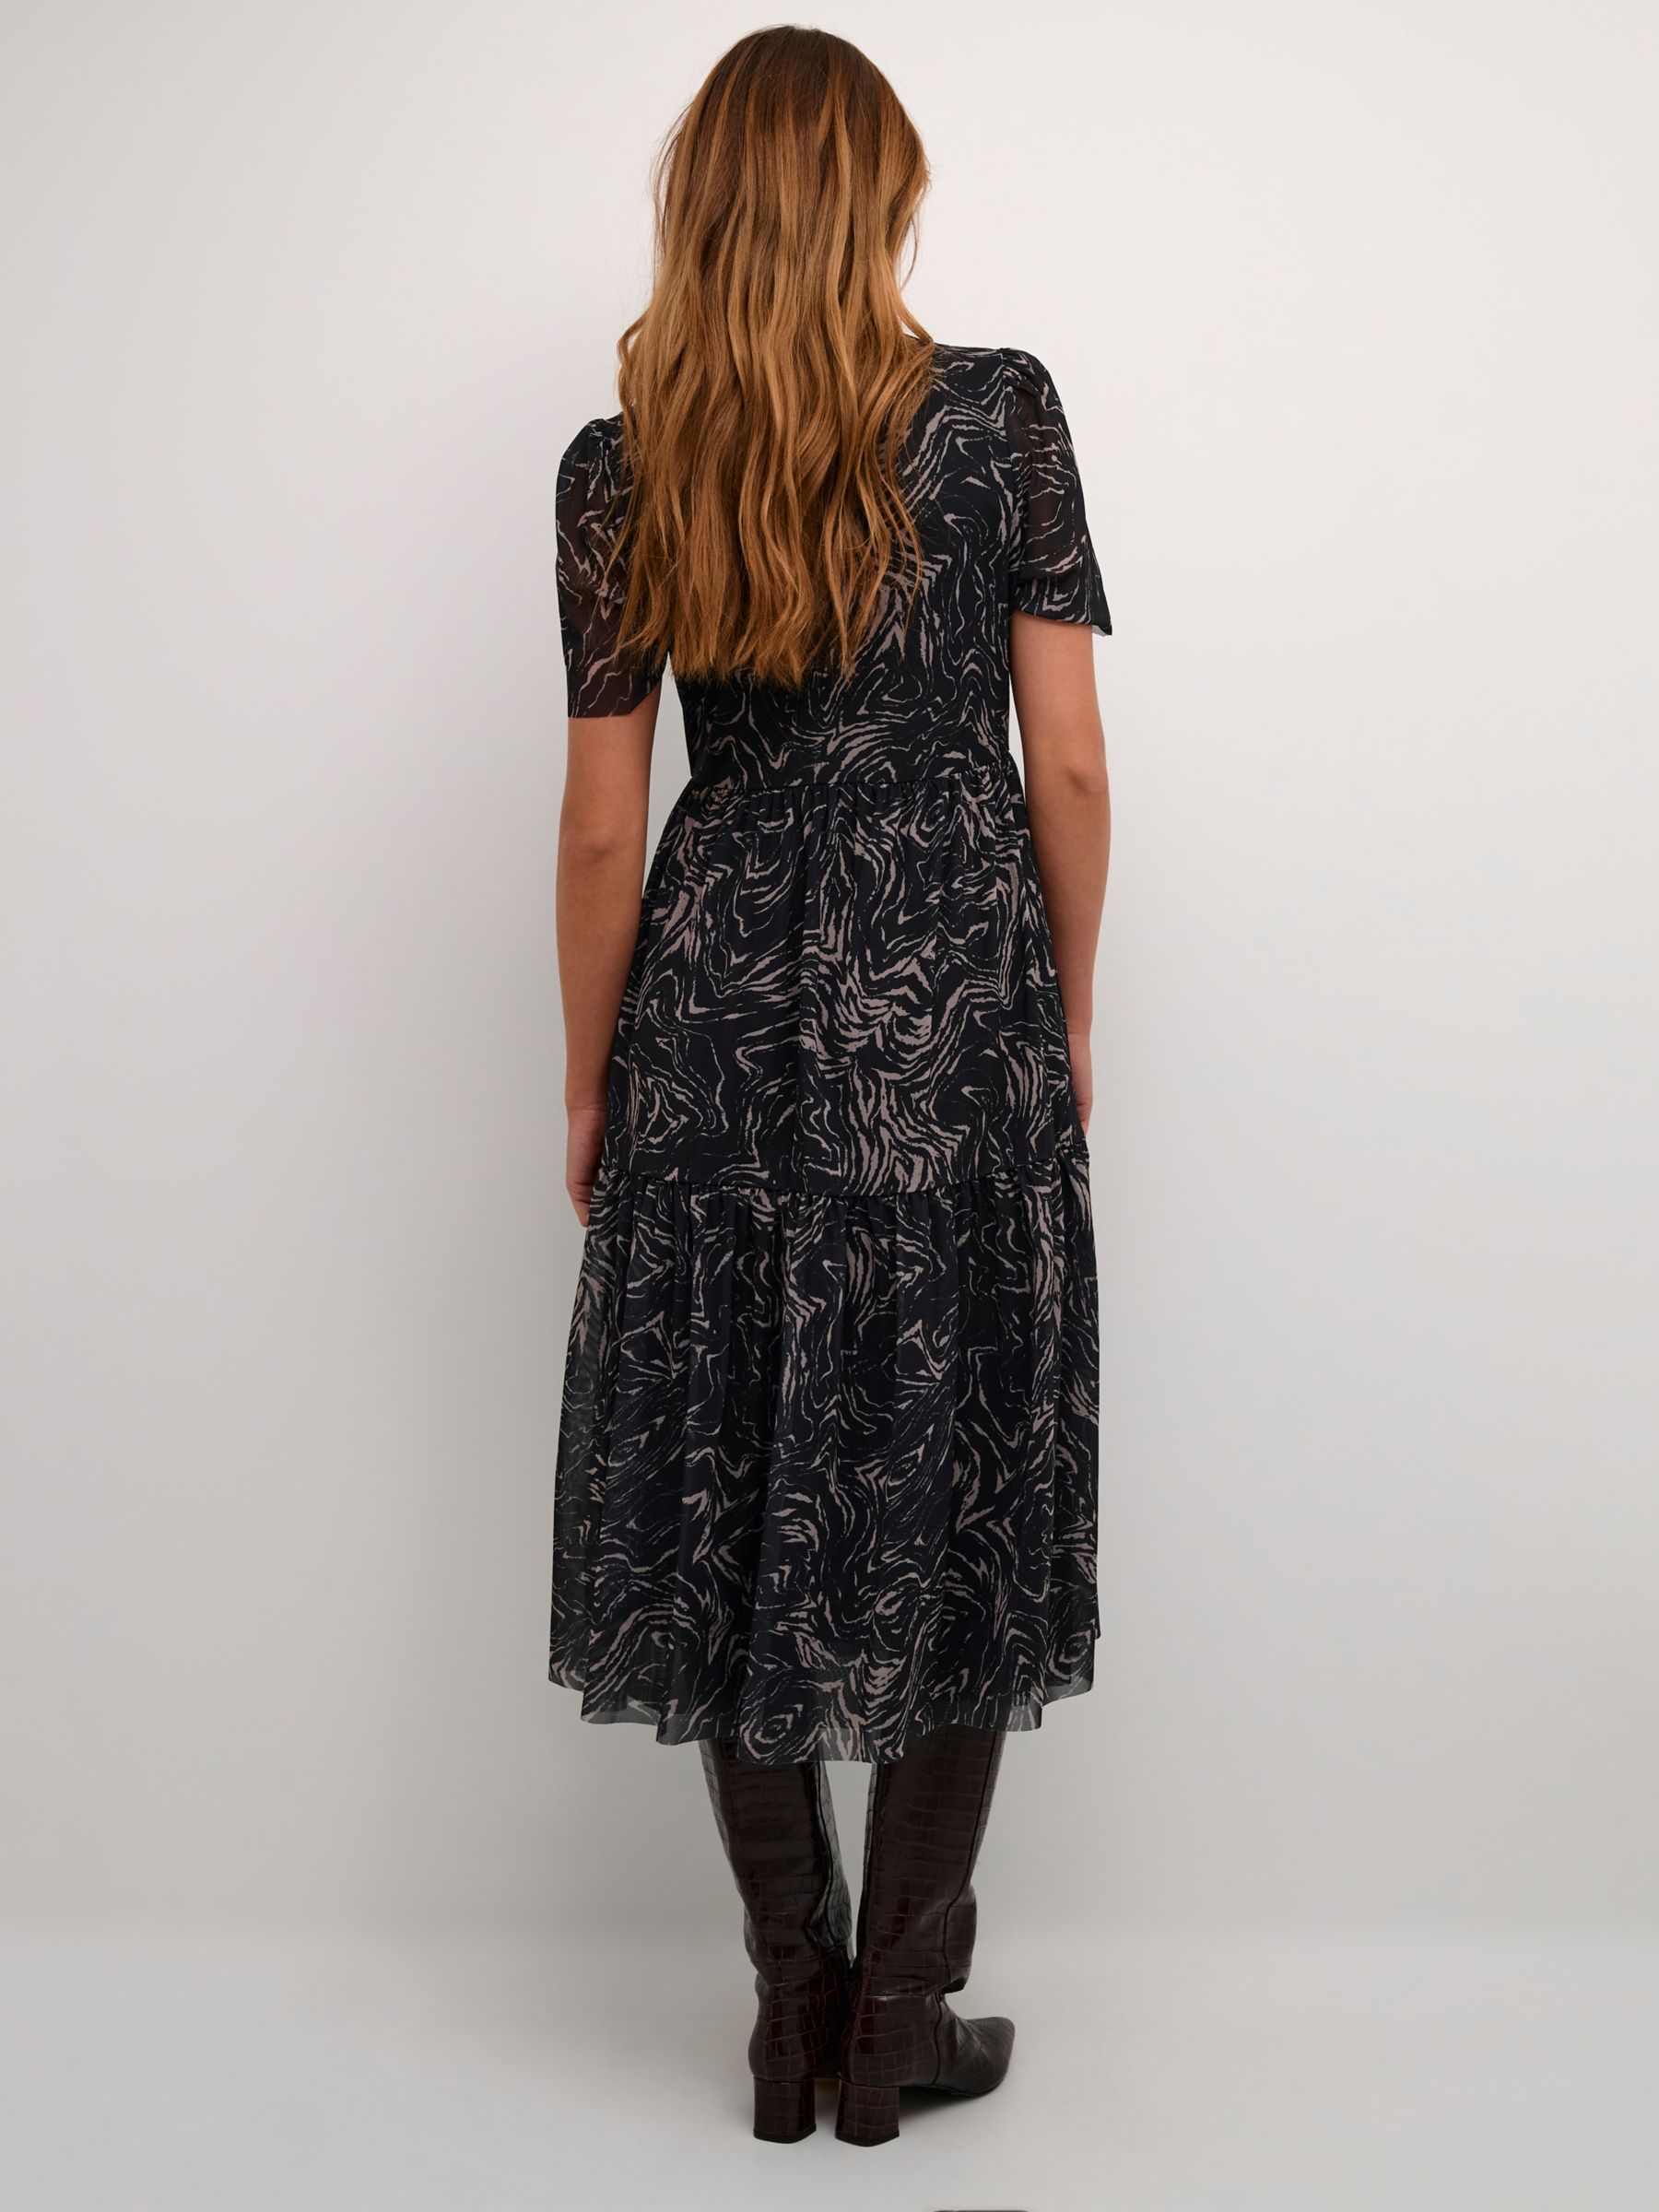 Soaked In Luxury Aldora Mesh Short Sleeve Wrap Dress, Black Swirl Print, XL